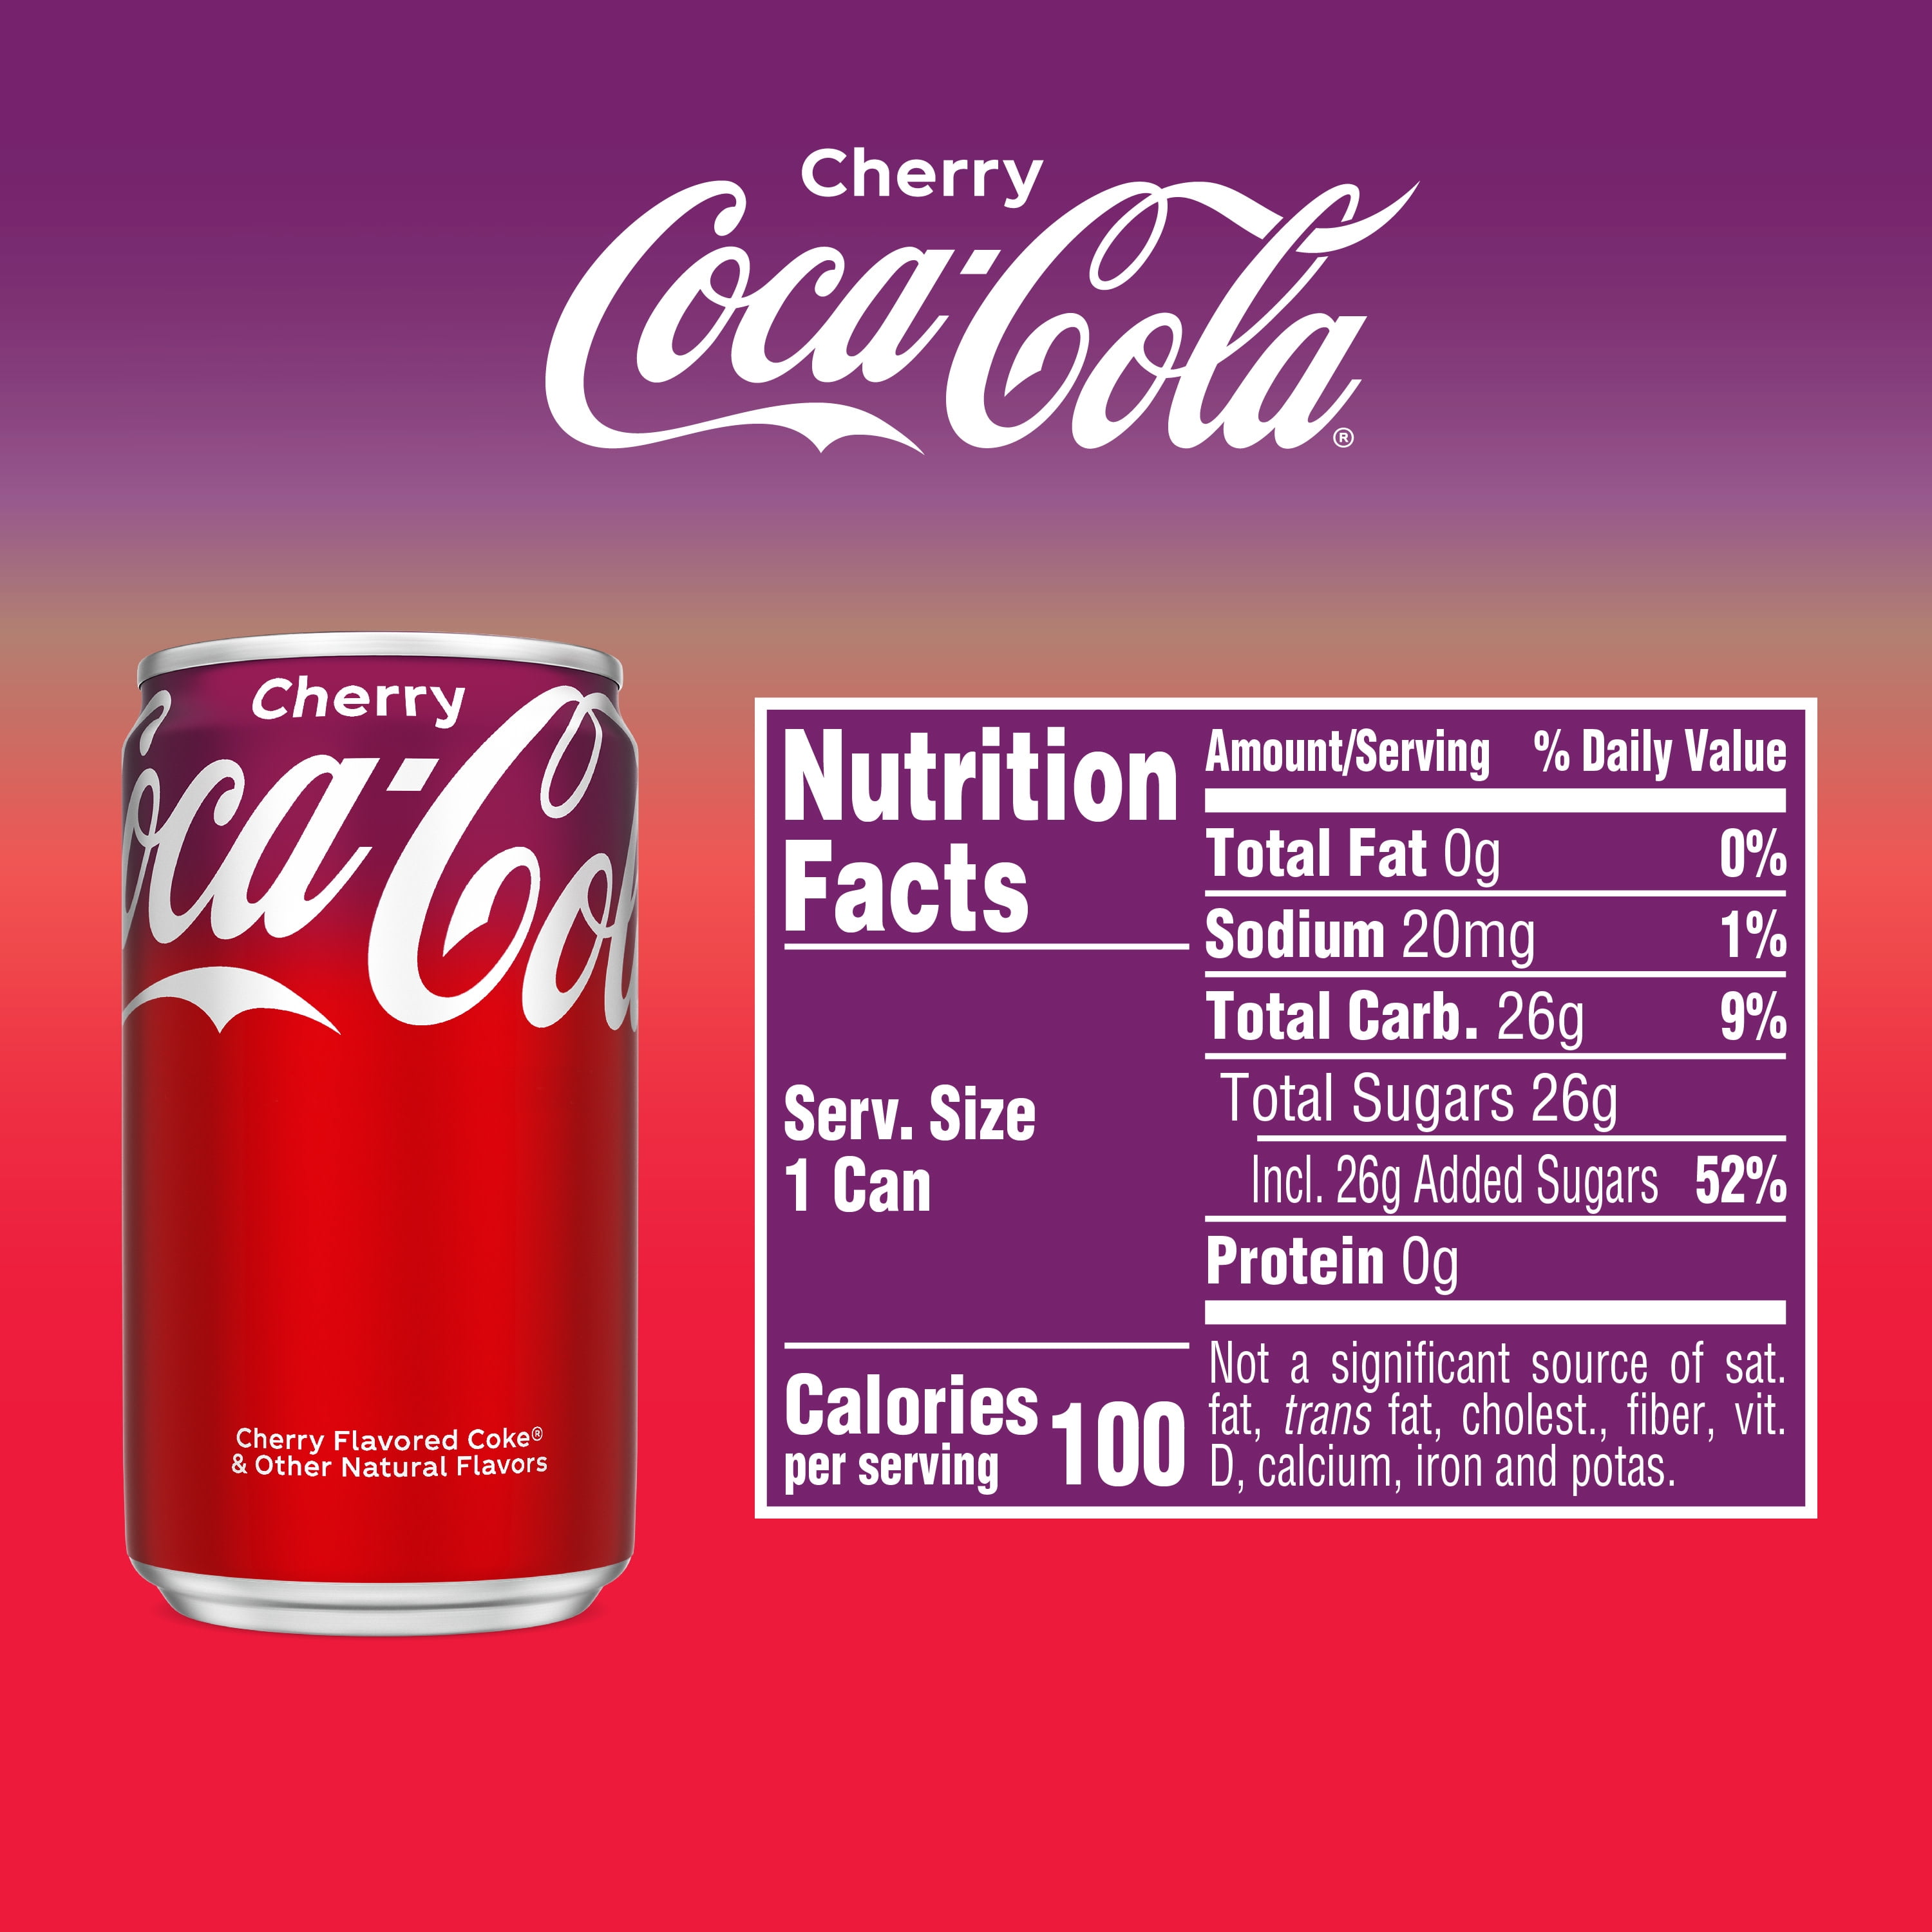 Coca Cola Cherry Flavored Mini Cans 6 Pack 100 Calories 7.5 fl oz 222 mL